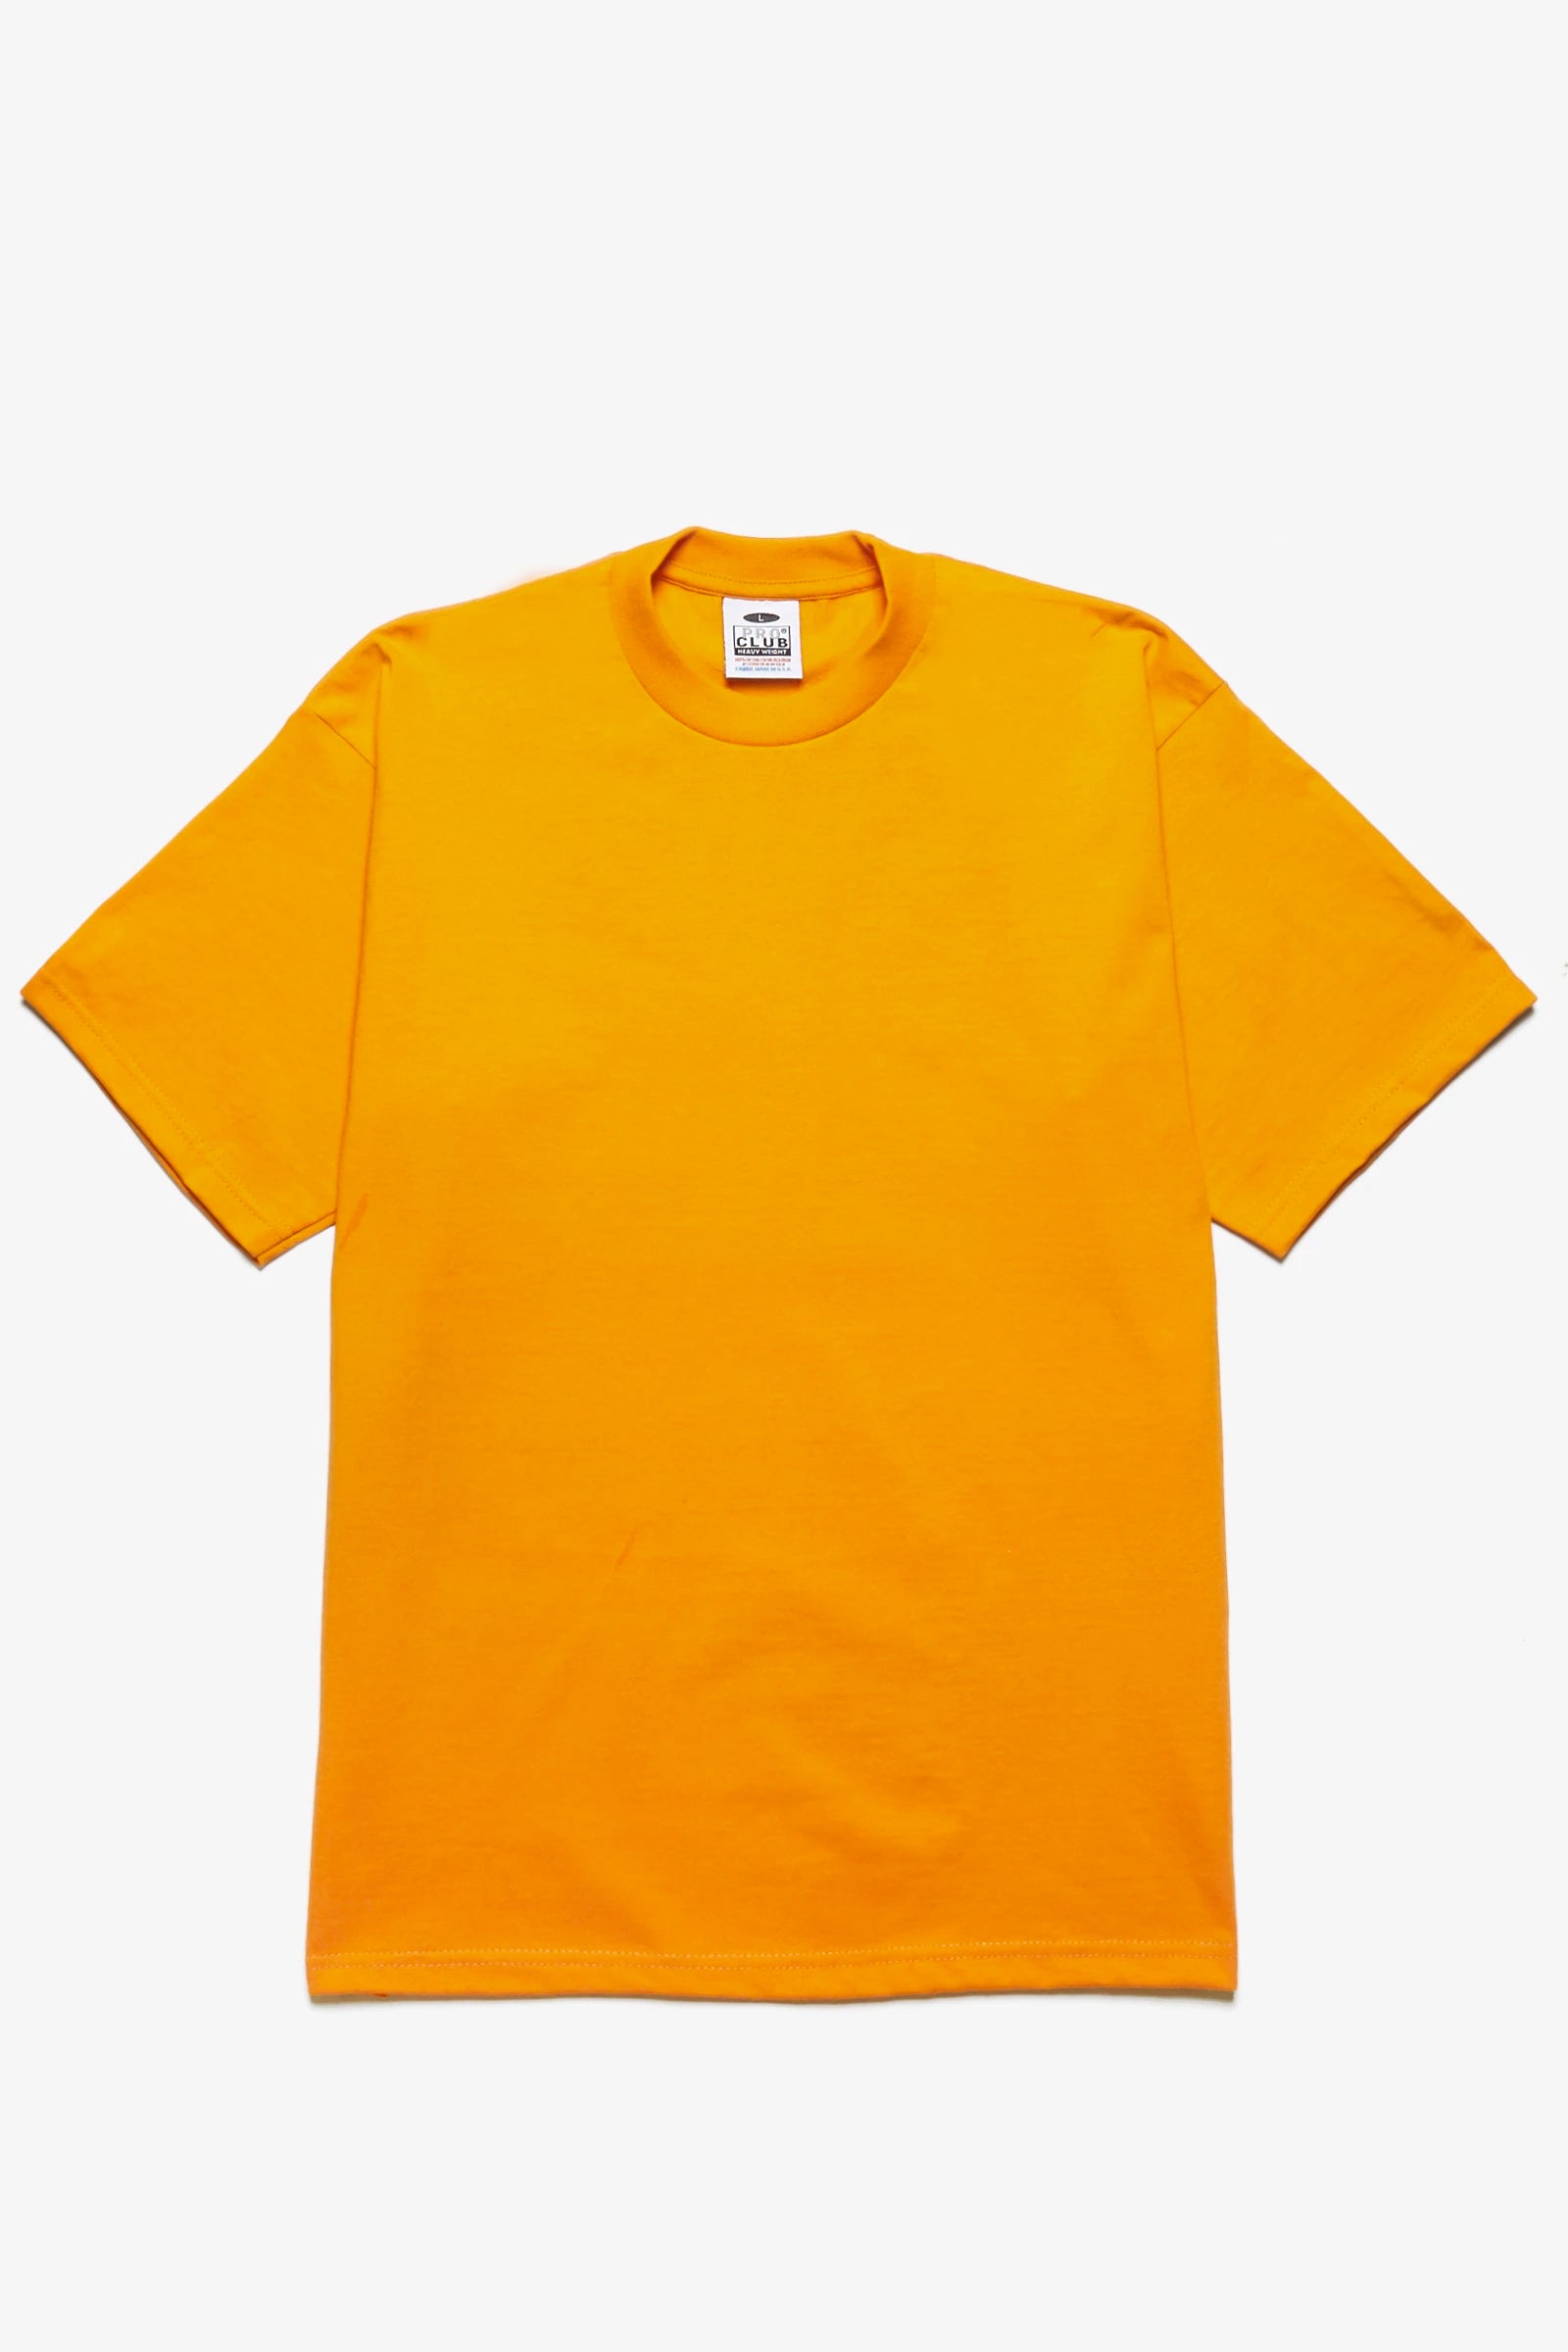 Pro Club - Heavyweight T-Shirt - Sunflower | Blacksmith Store